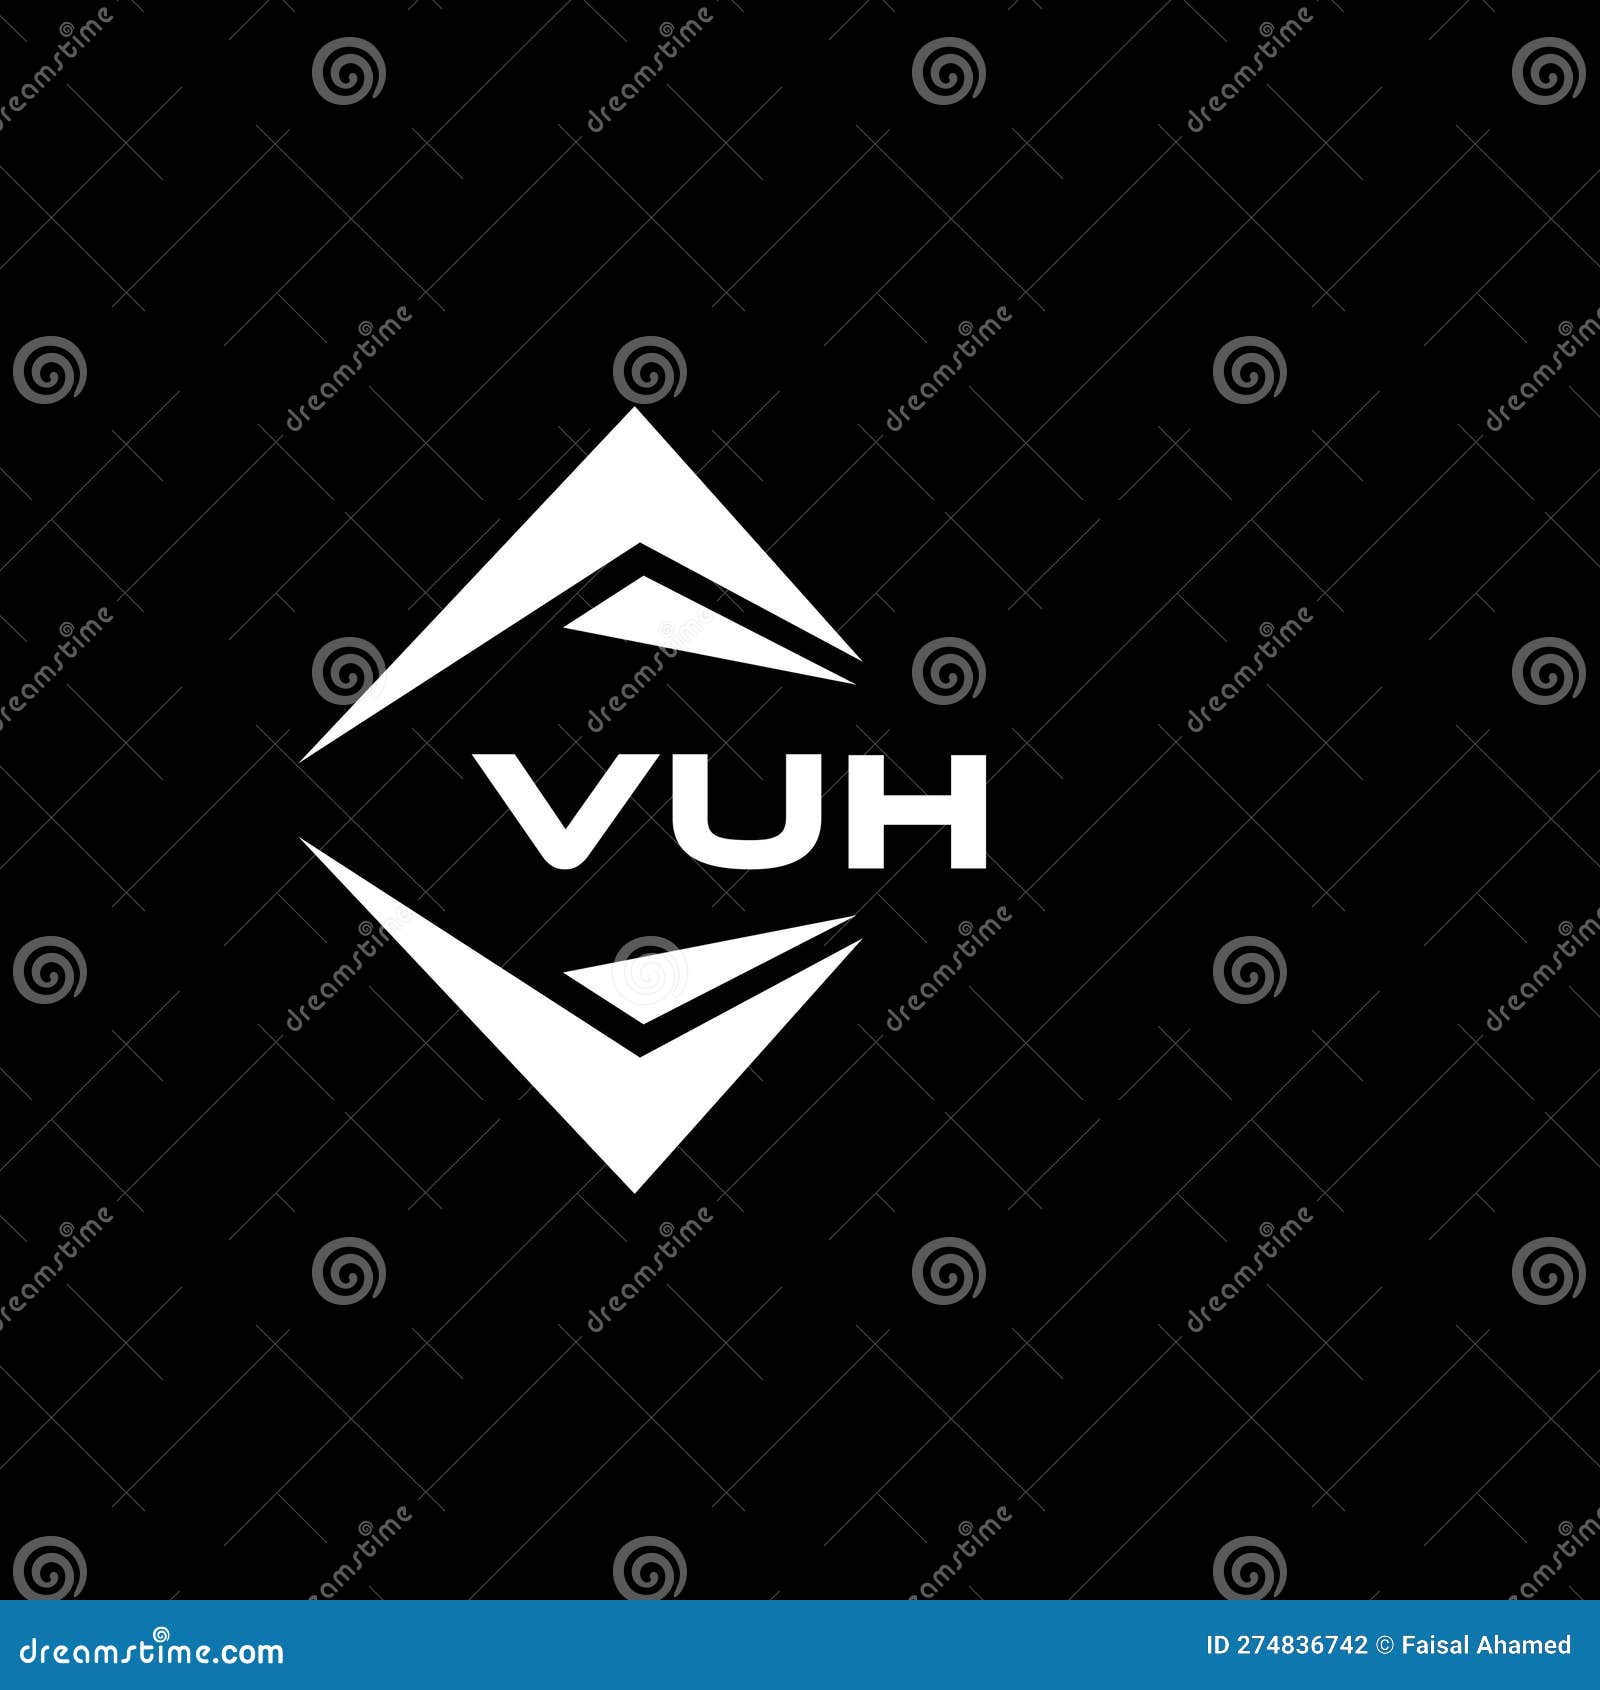 vuh abstract technology logo  on black background. vuh creative initials letter logo concept